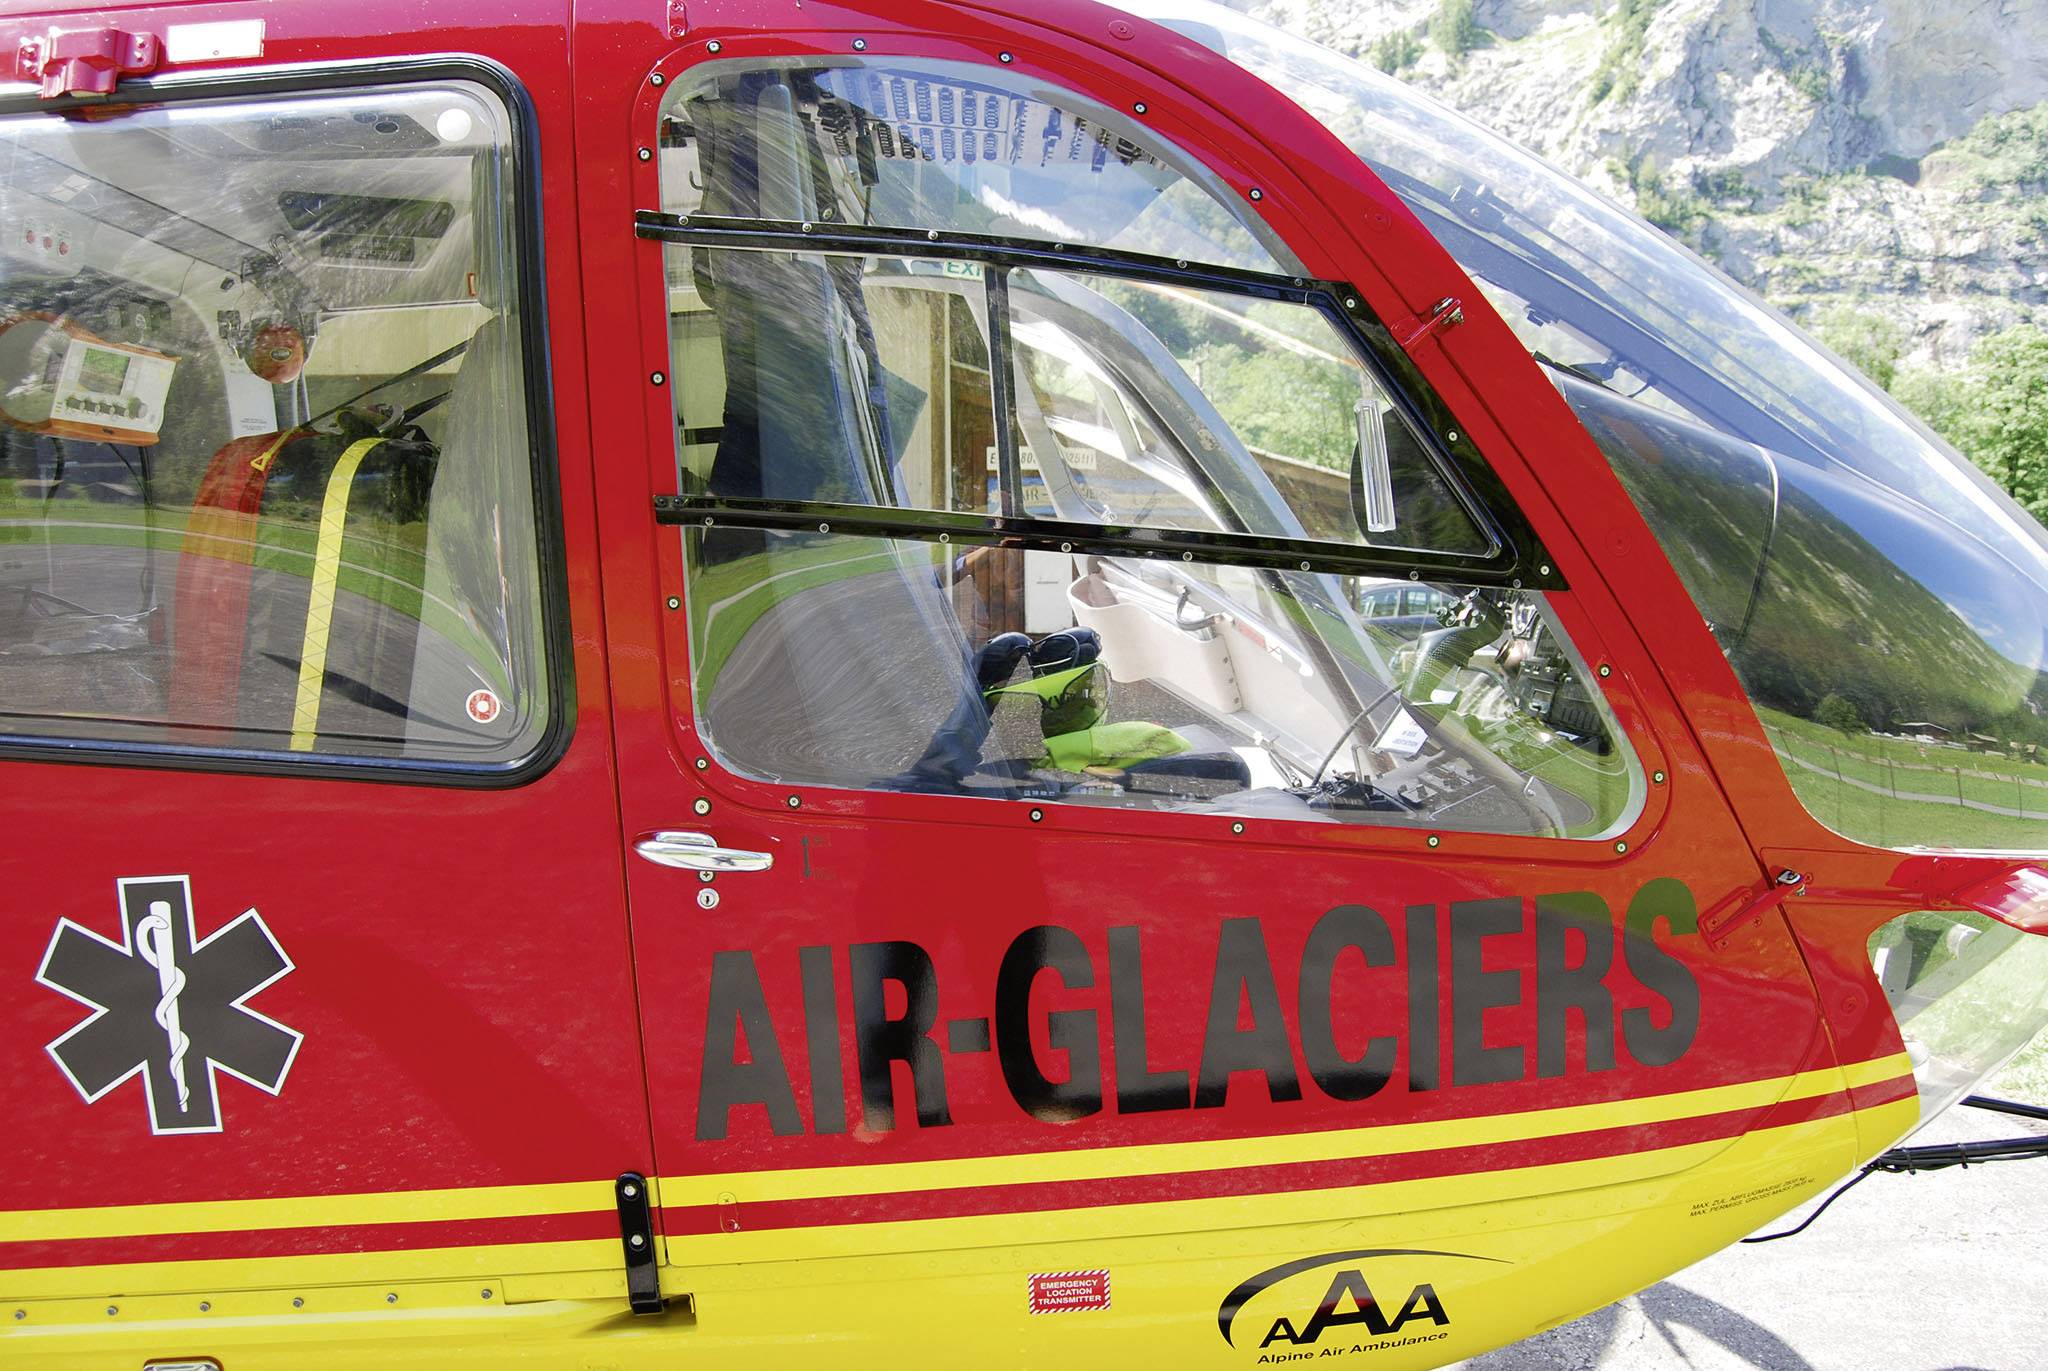 EC 135 Air-Glaciers Helicopter Set 1:72 Plastic Model Kit REVELL 